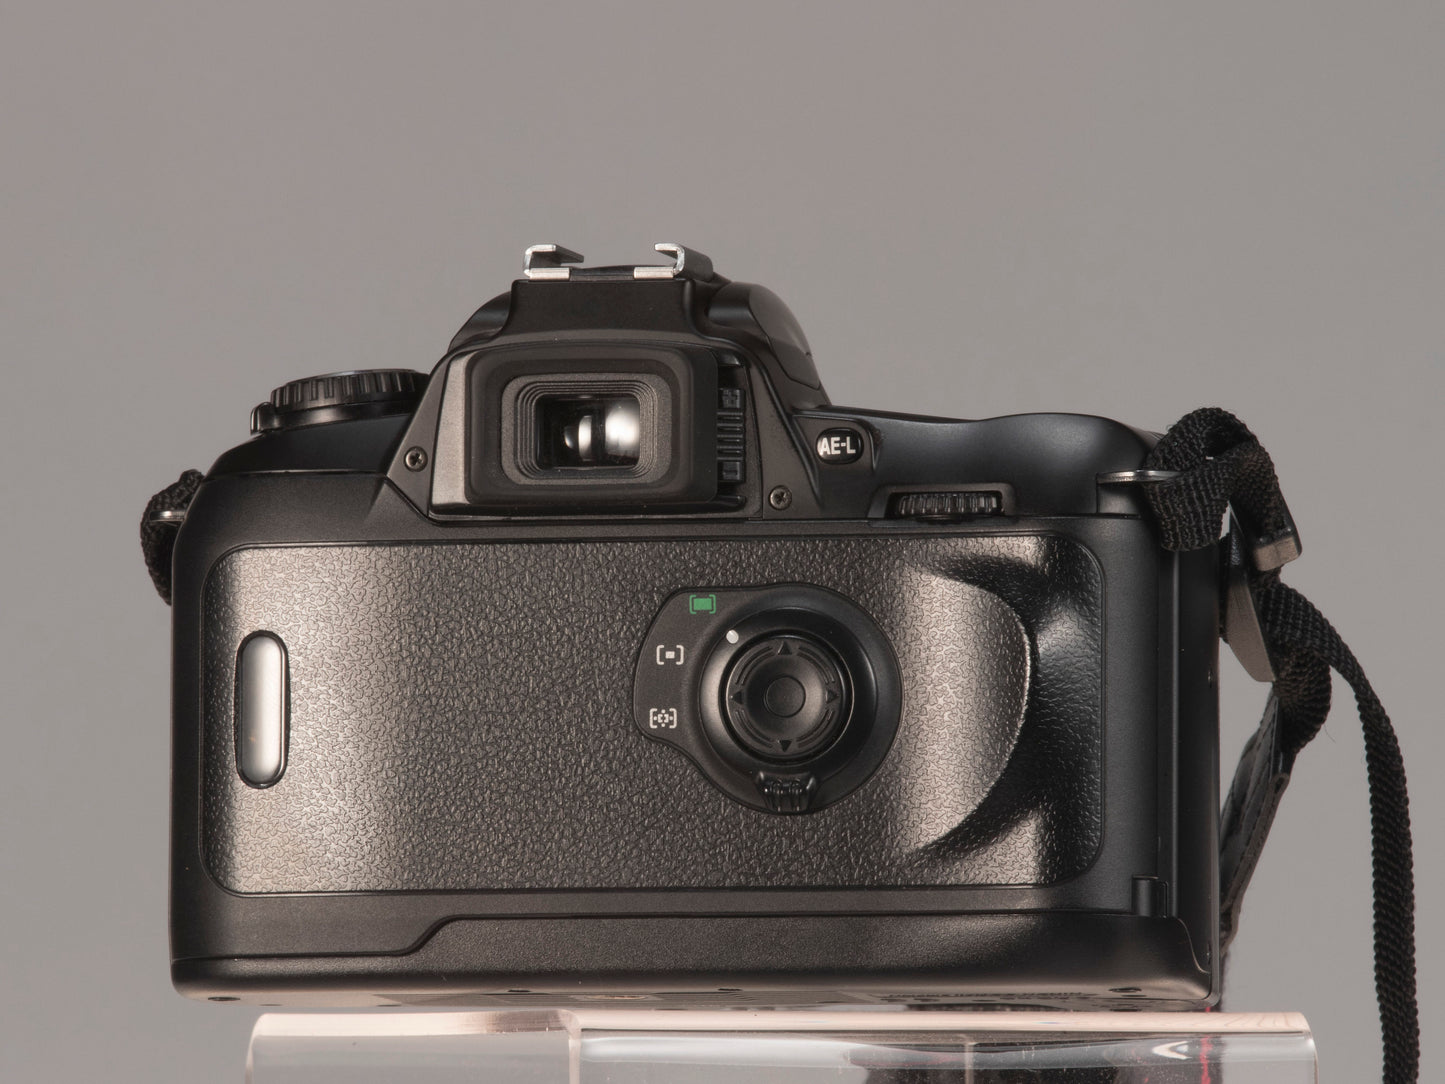 Nikon F75 (aka N75) 35mm film SLR